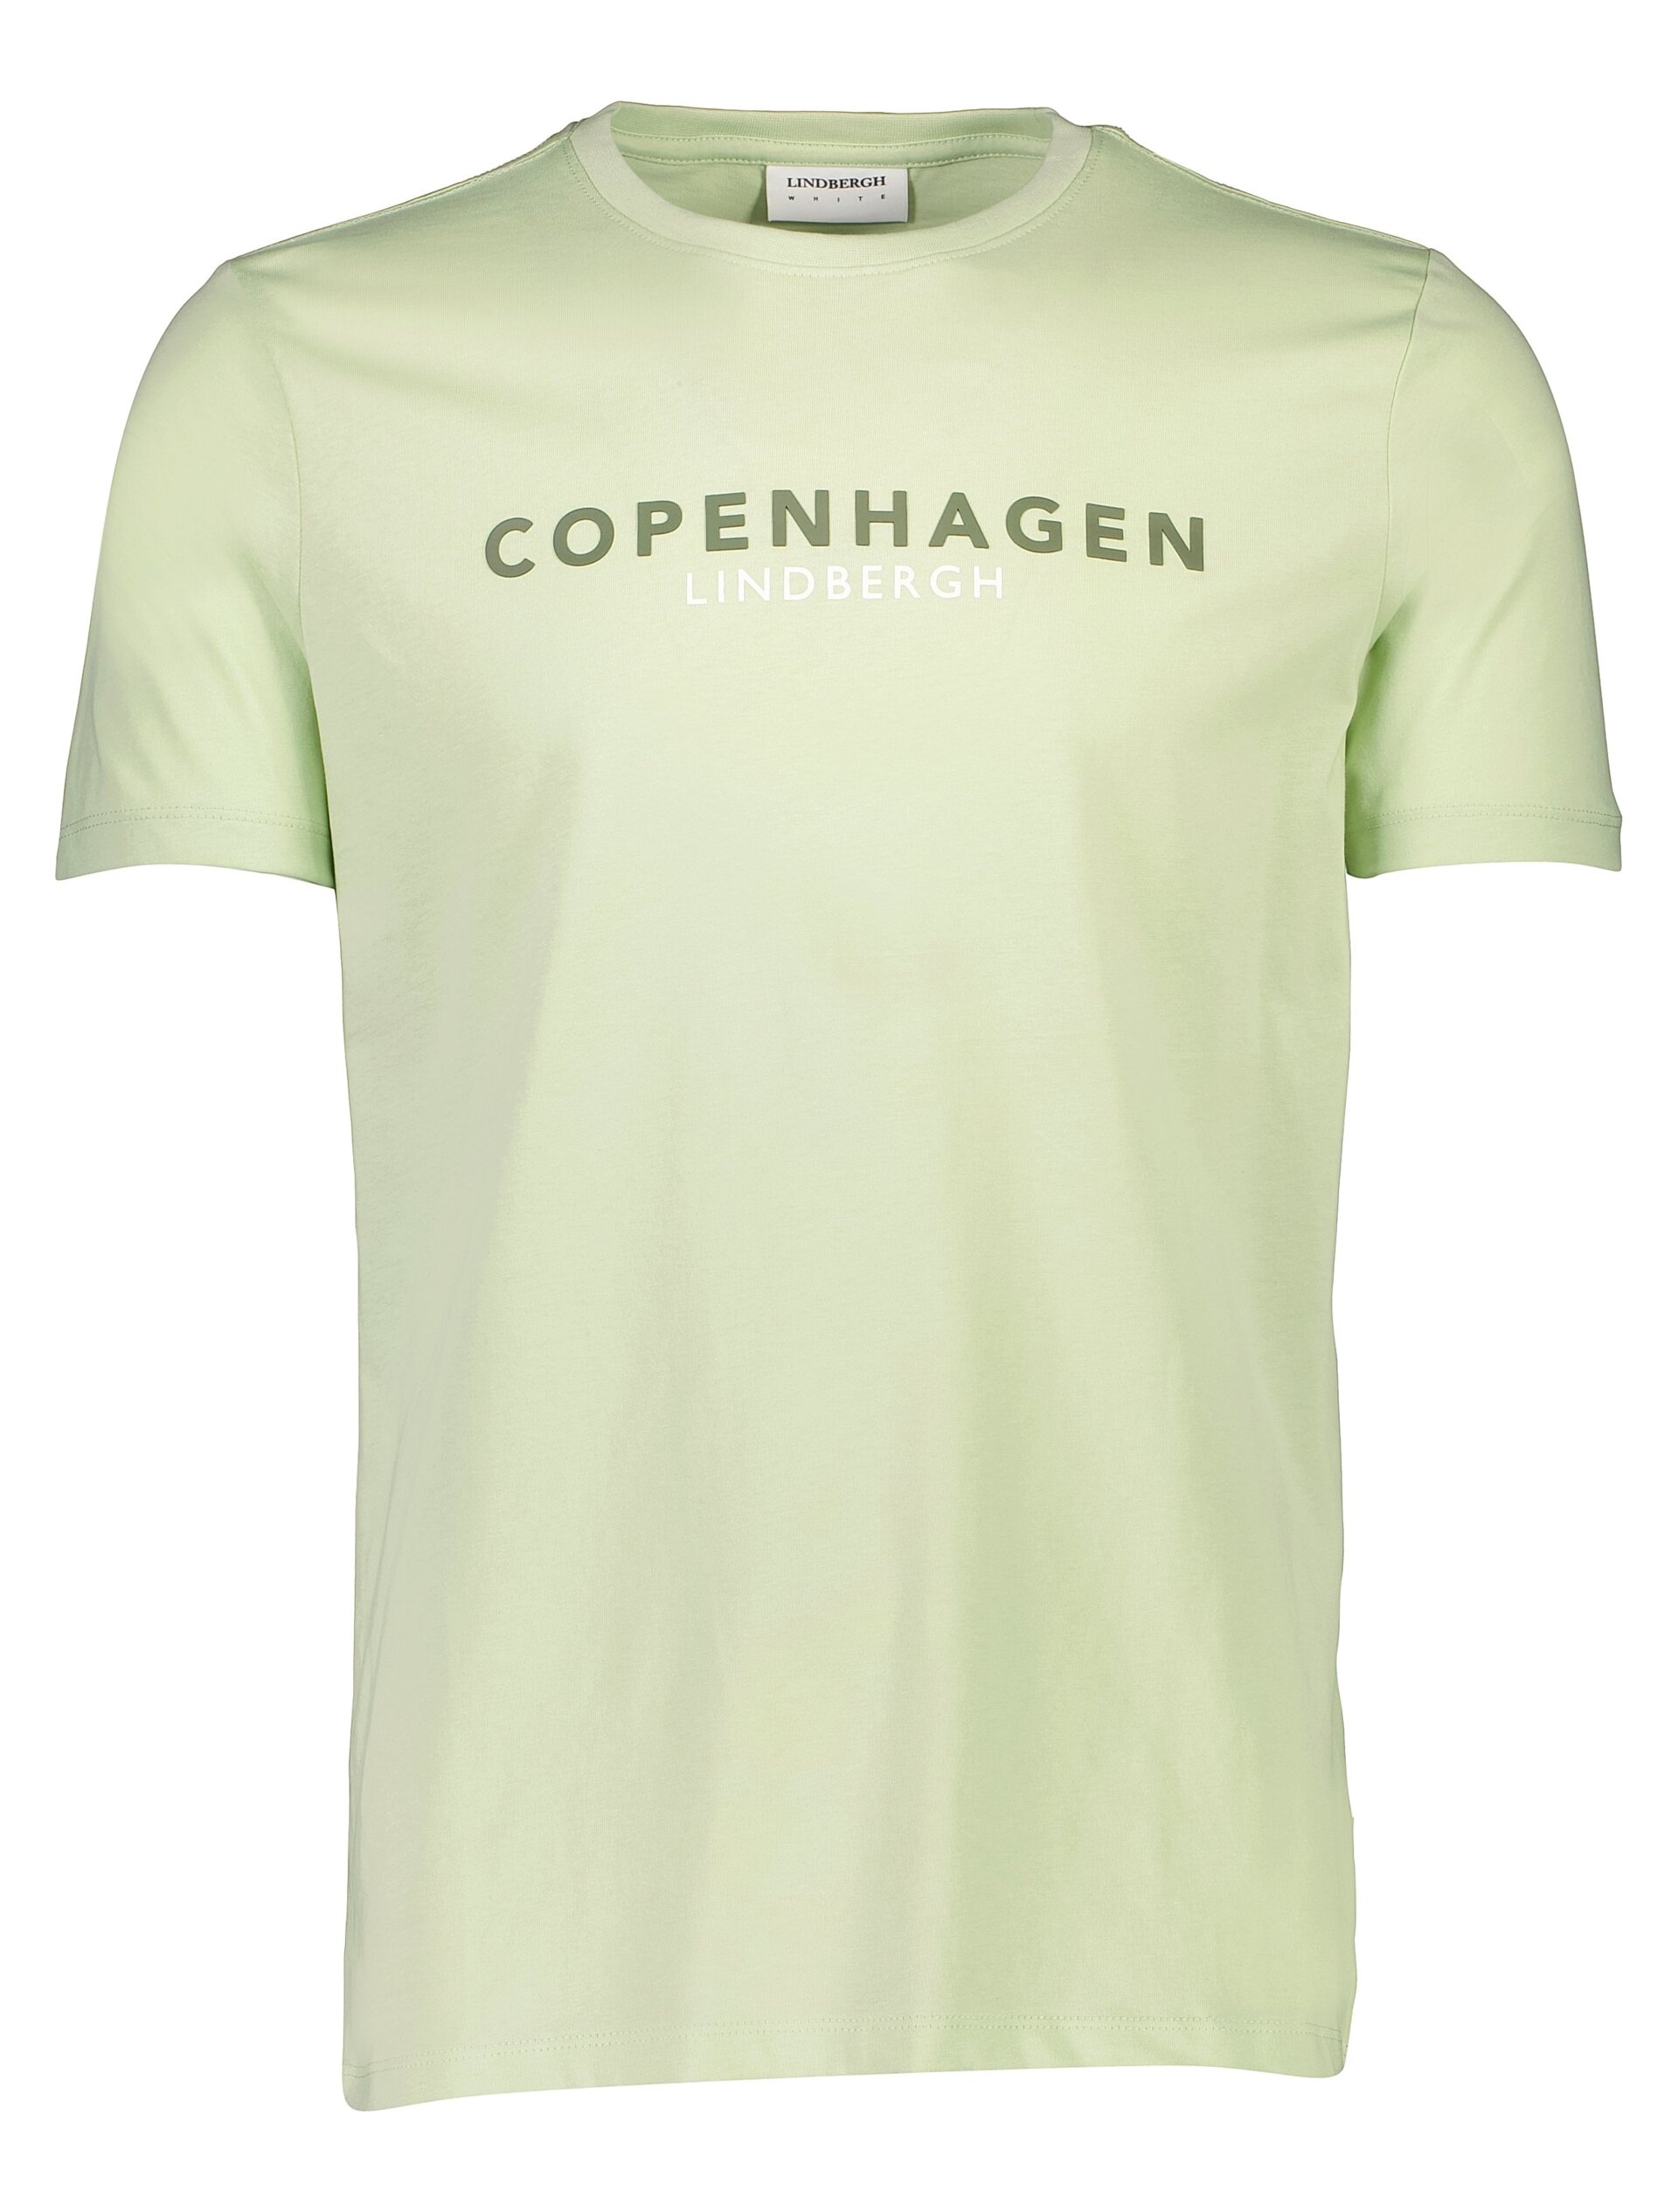 Lindbergh T-shirt grön / mint 224